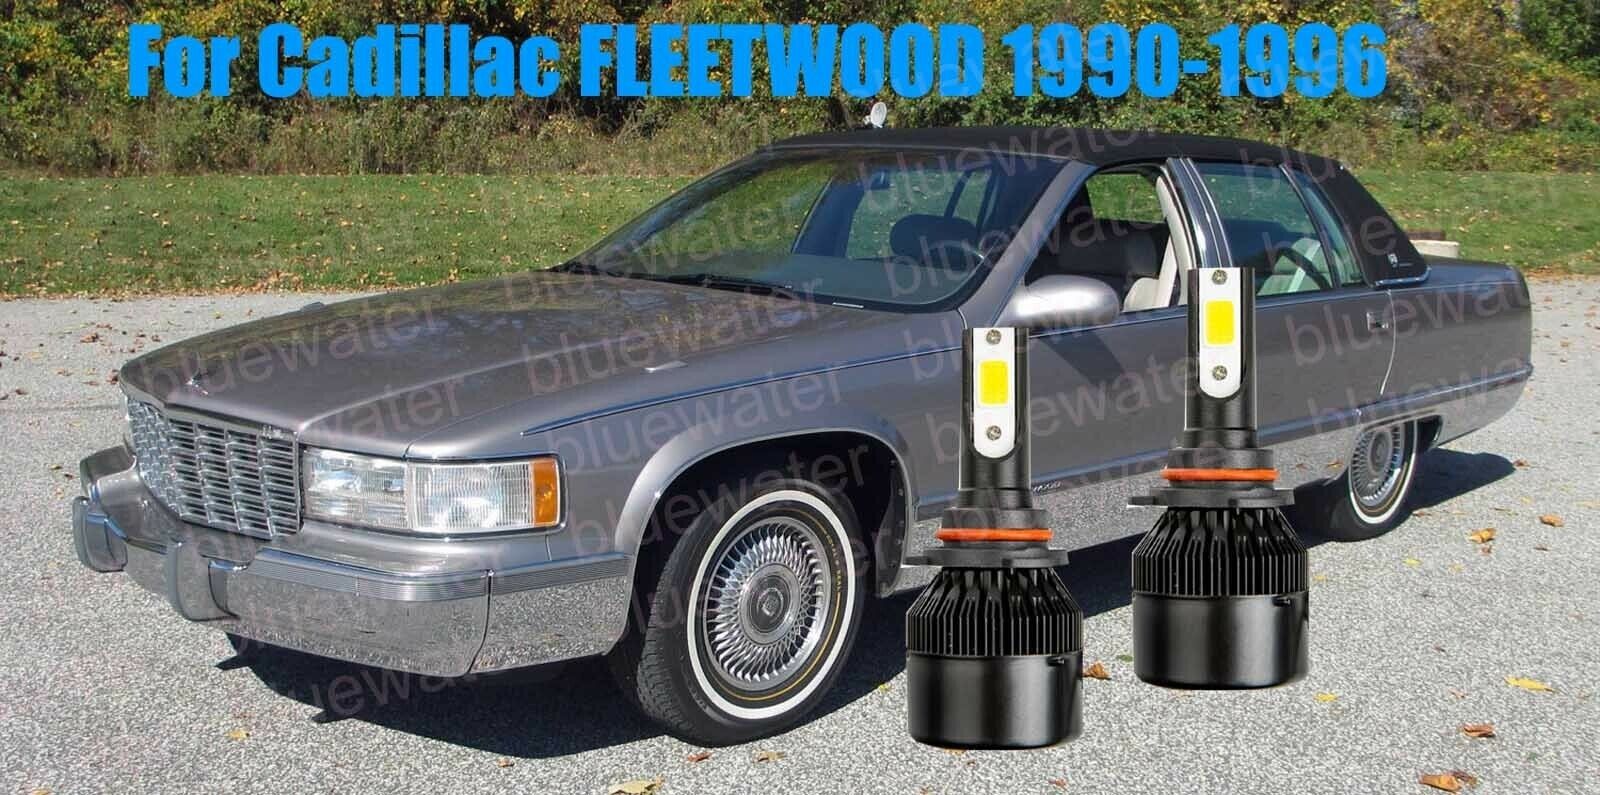 LED For Cadillac FLEETWOOD 1990-1996 Headlight Kit 9006 HB4 CREE Bulbs Low Beam